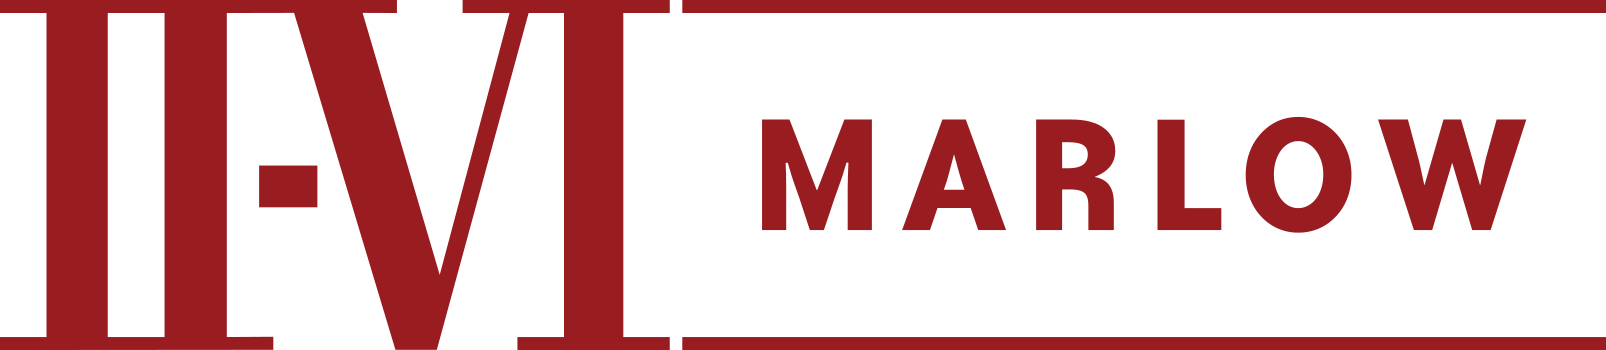 Marlow Industries, Inc.